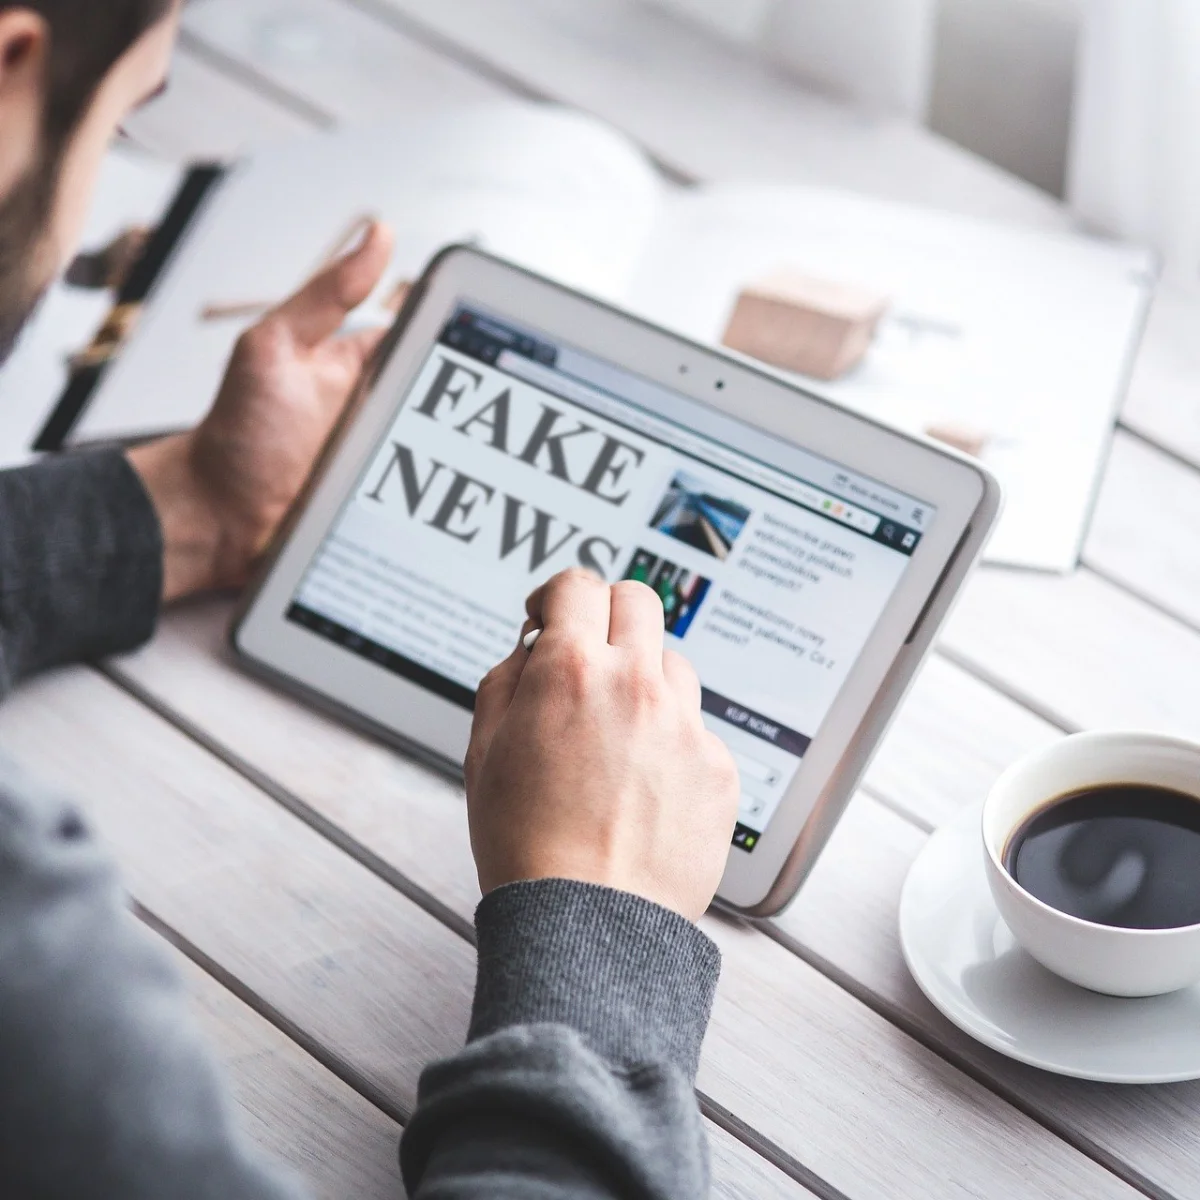 Congresso inicia fase de combate às fake news